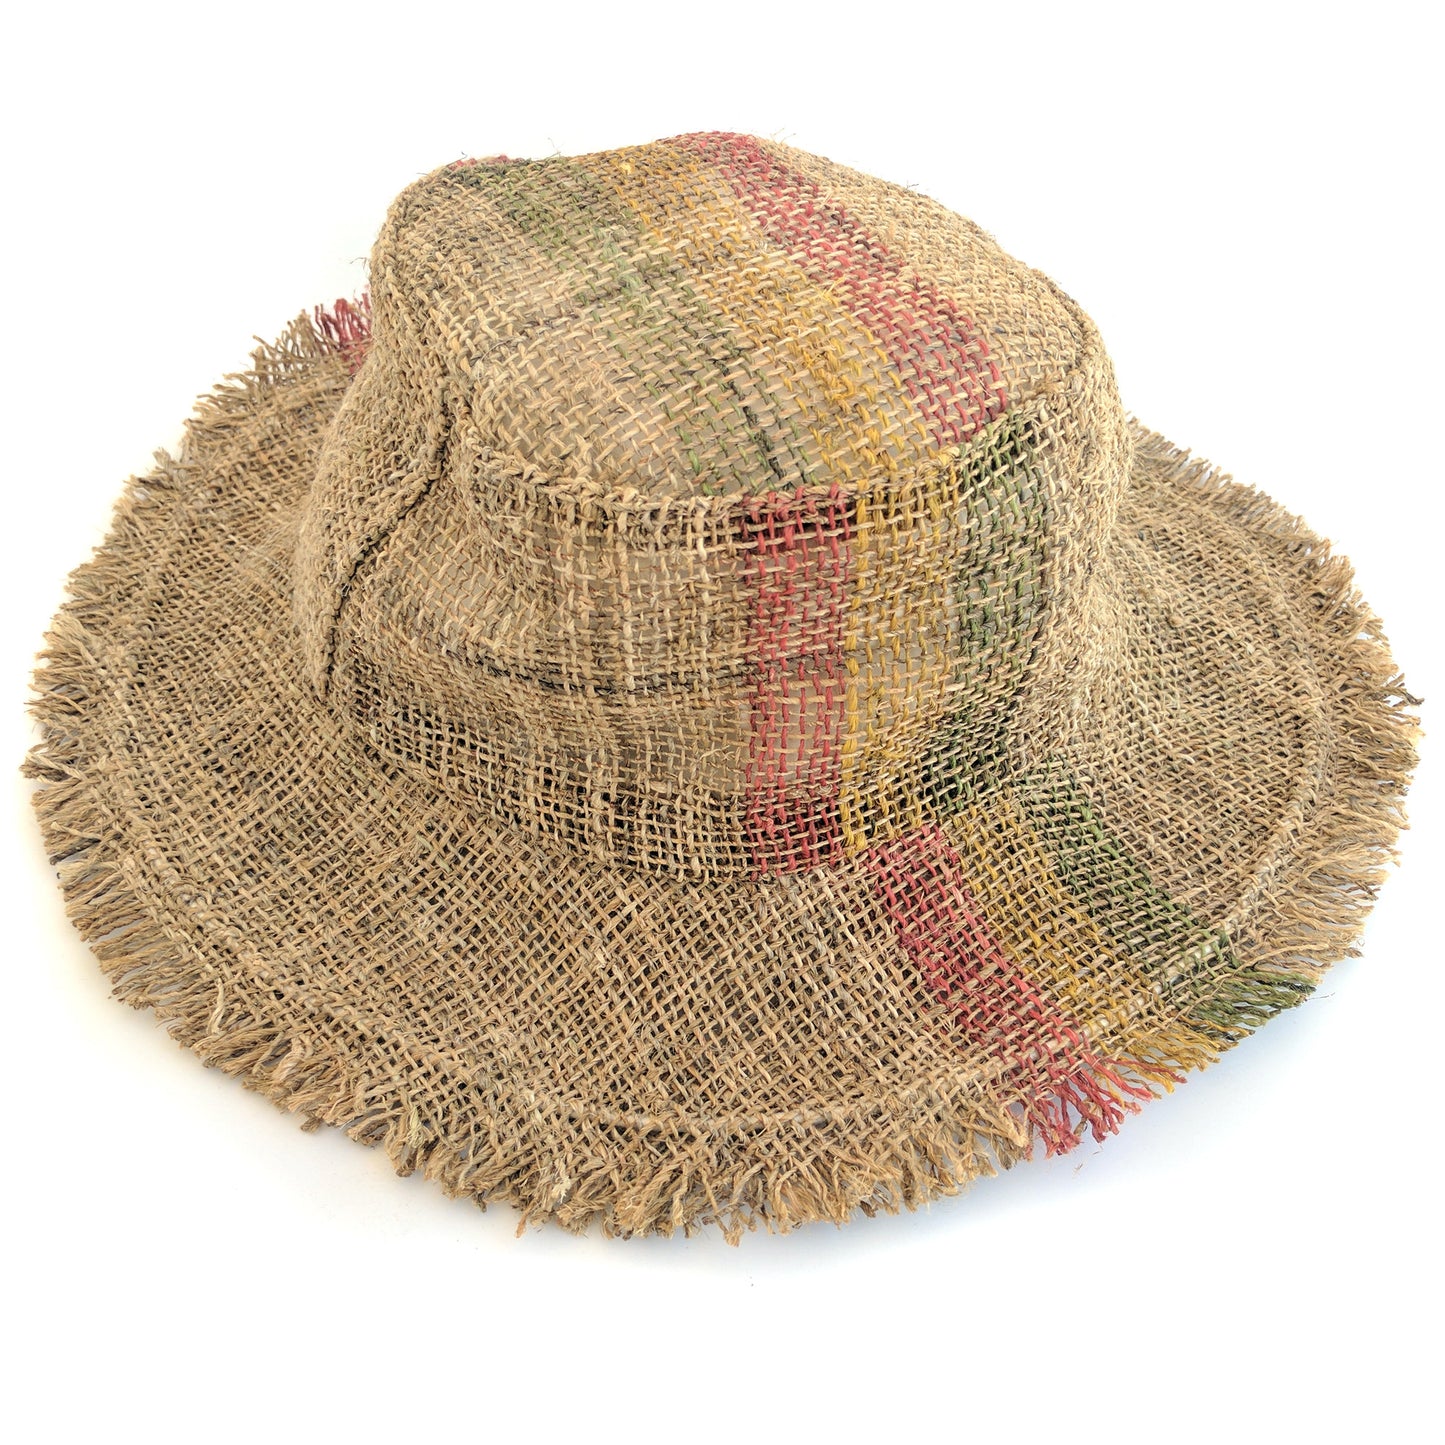 HEMP Hats made from 100% natural, organic and eco-friendly handwoven HEMP